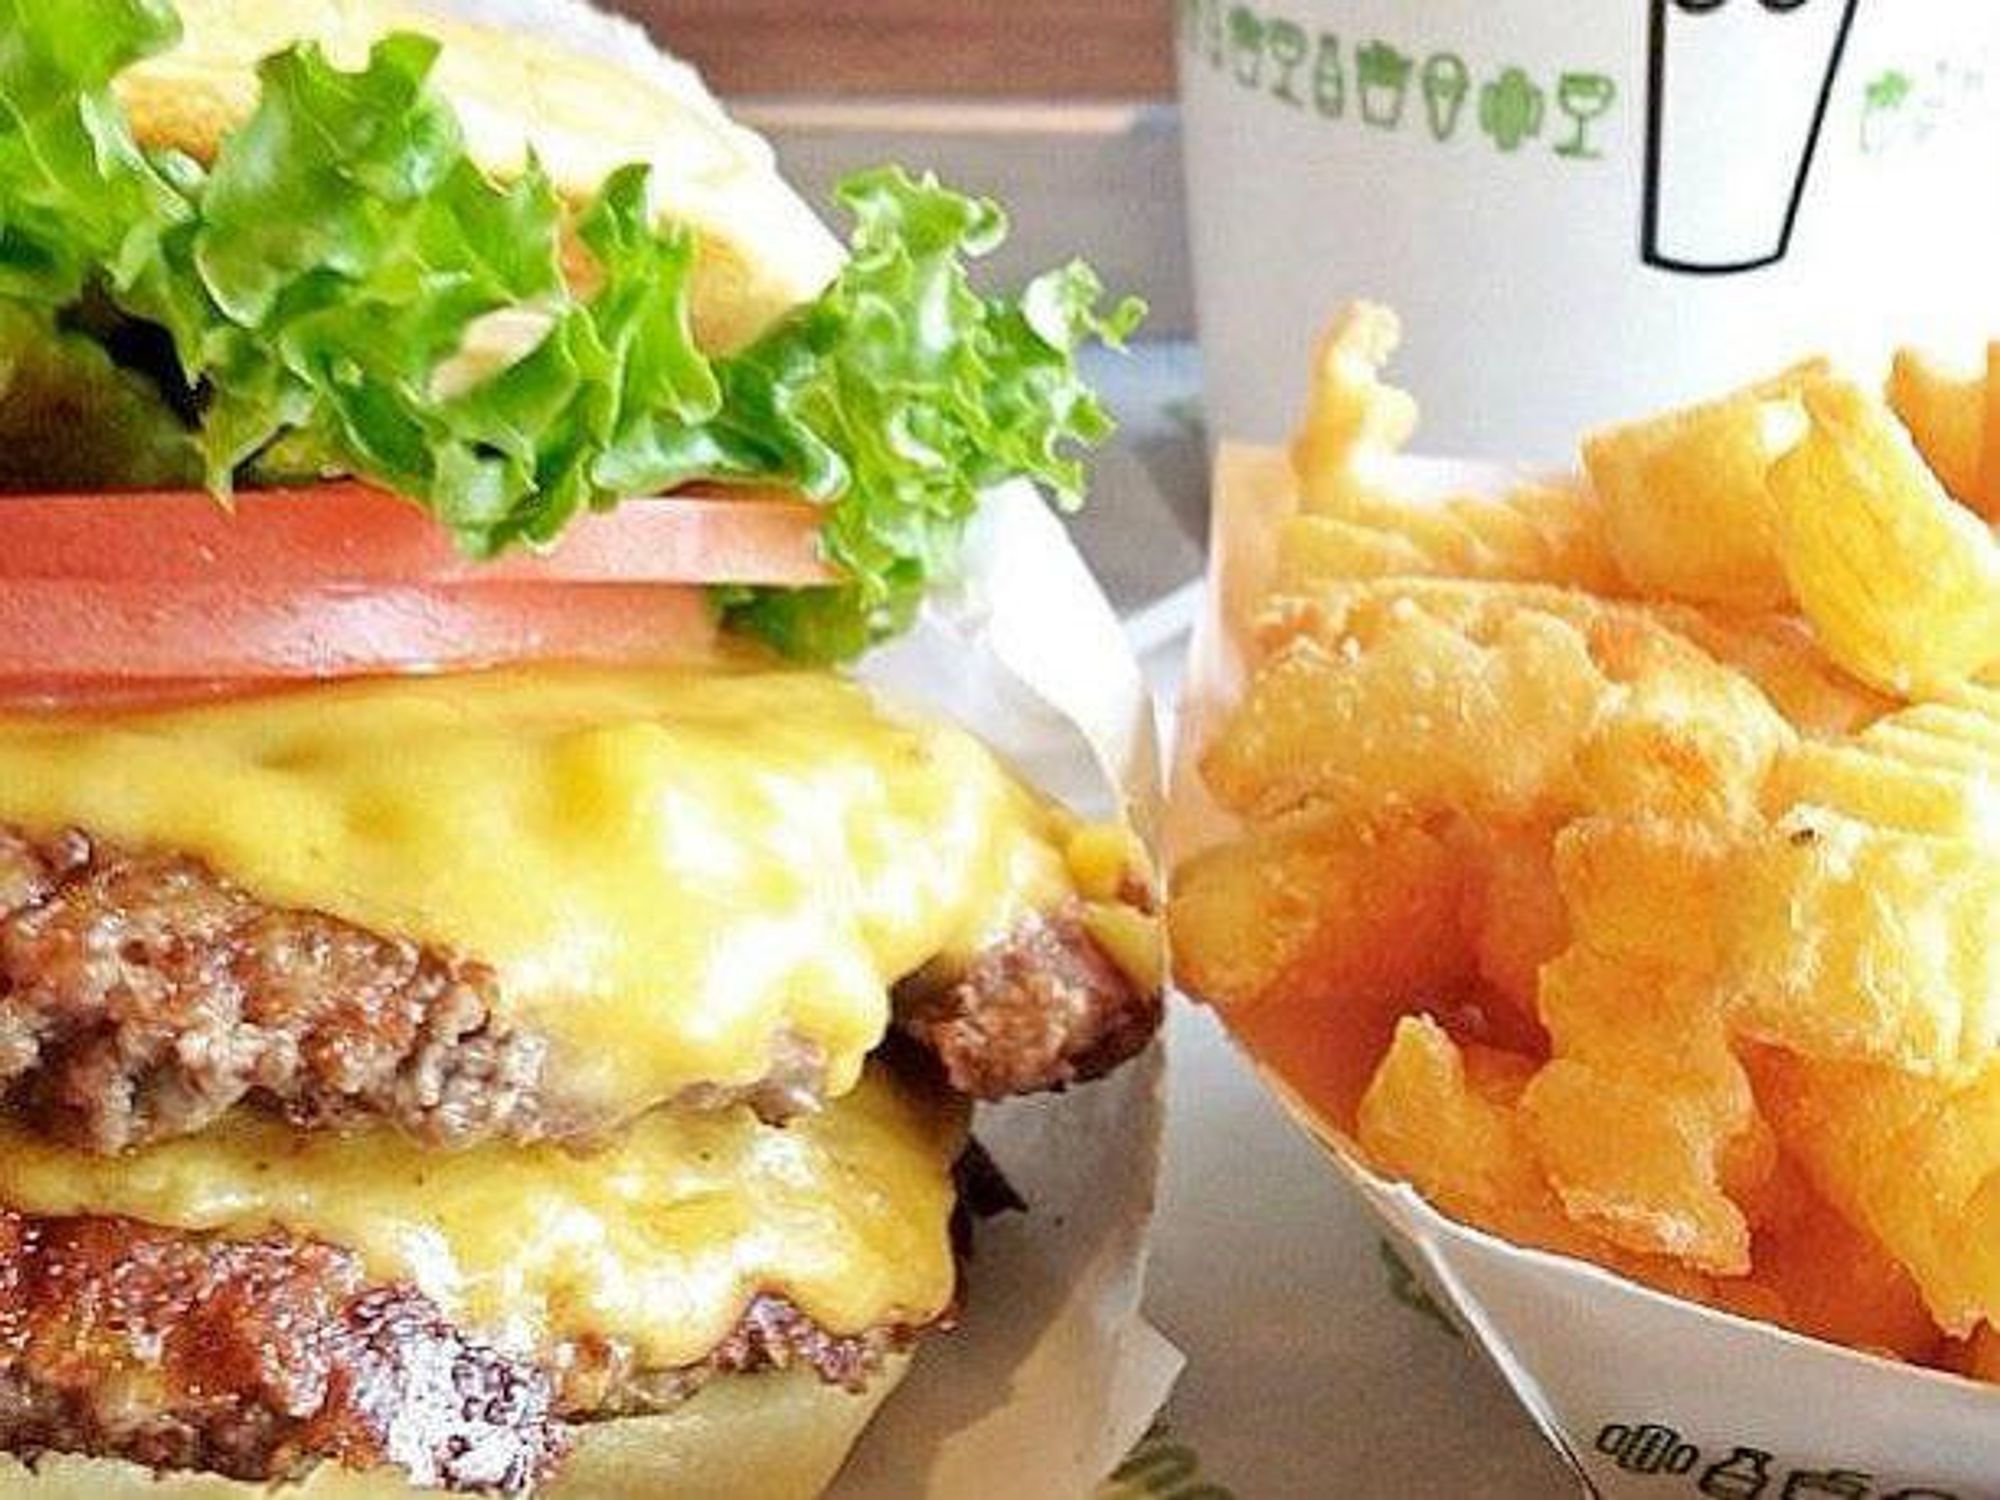 Burger and crinkle fries at Shake Shack